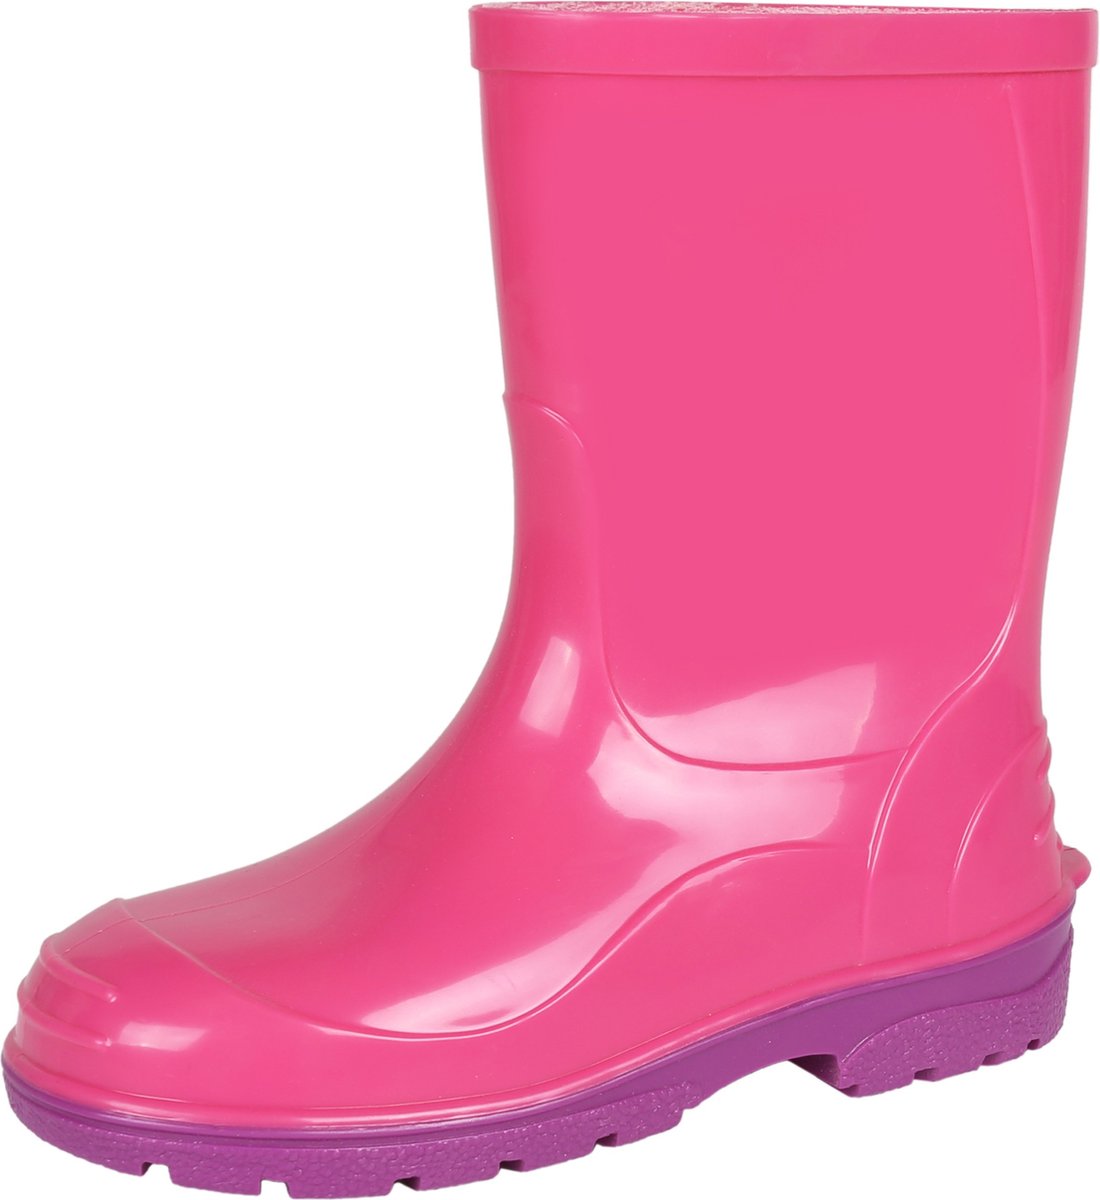 Roze laarzen met paarse zool - Ola LEMIGO / 30